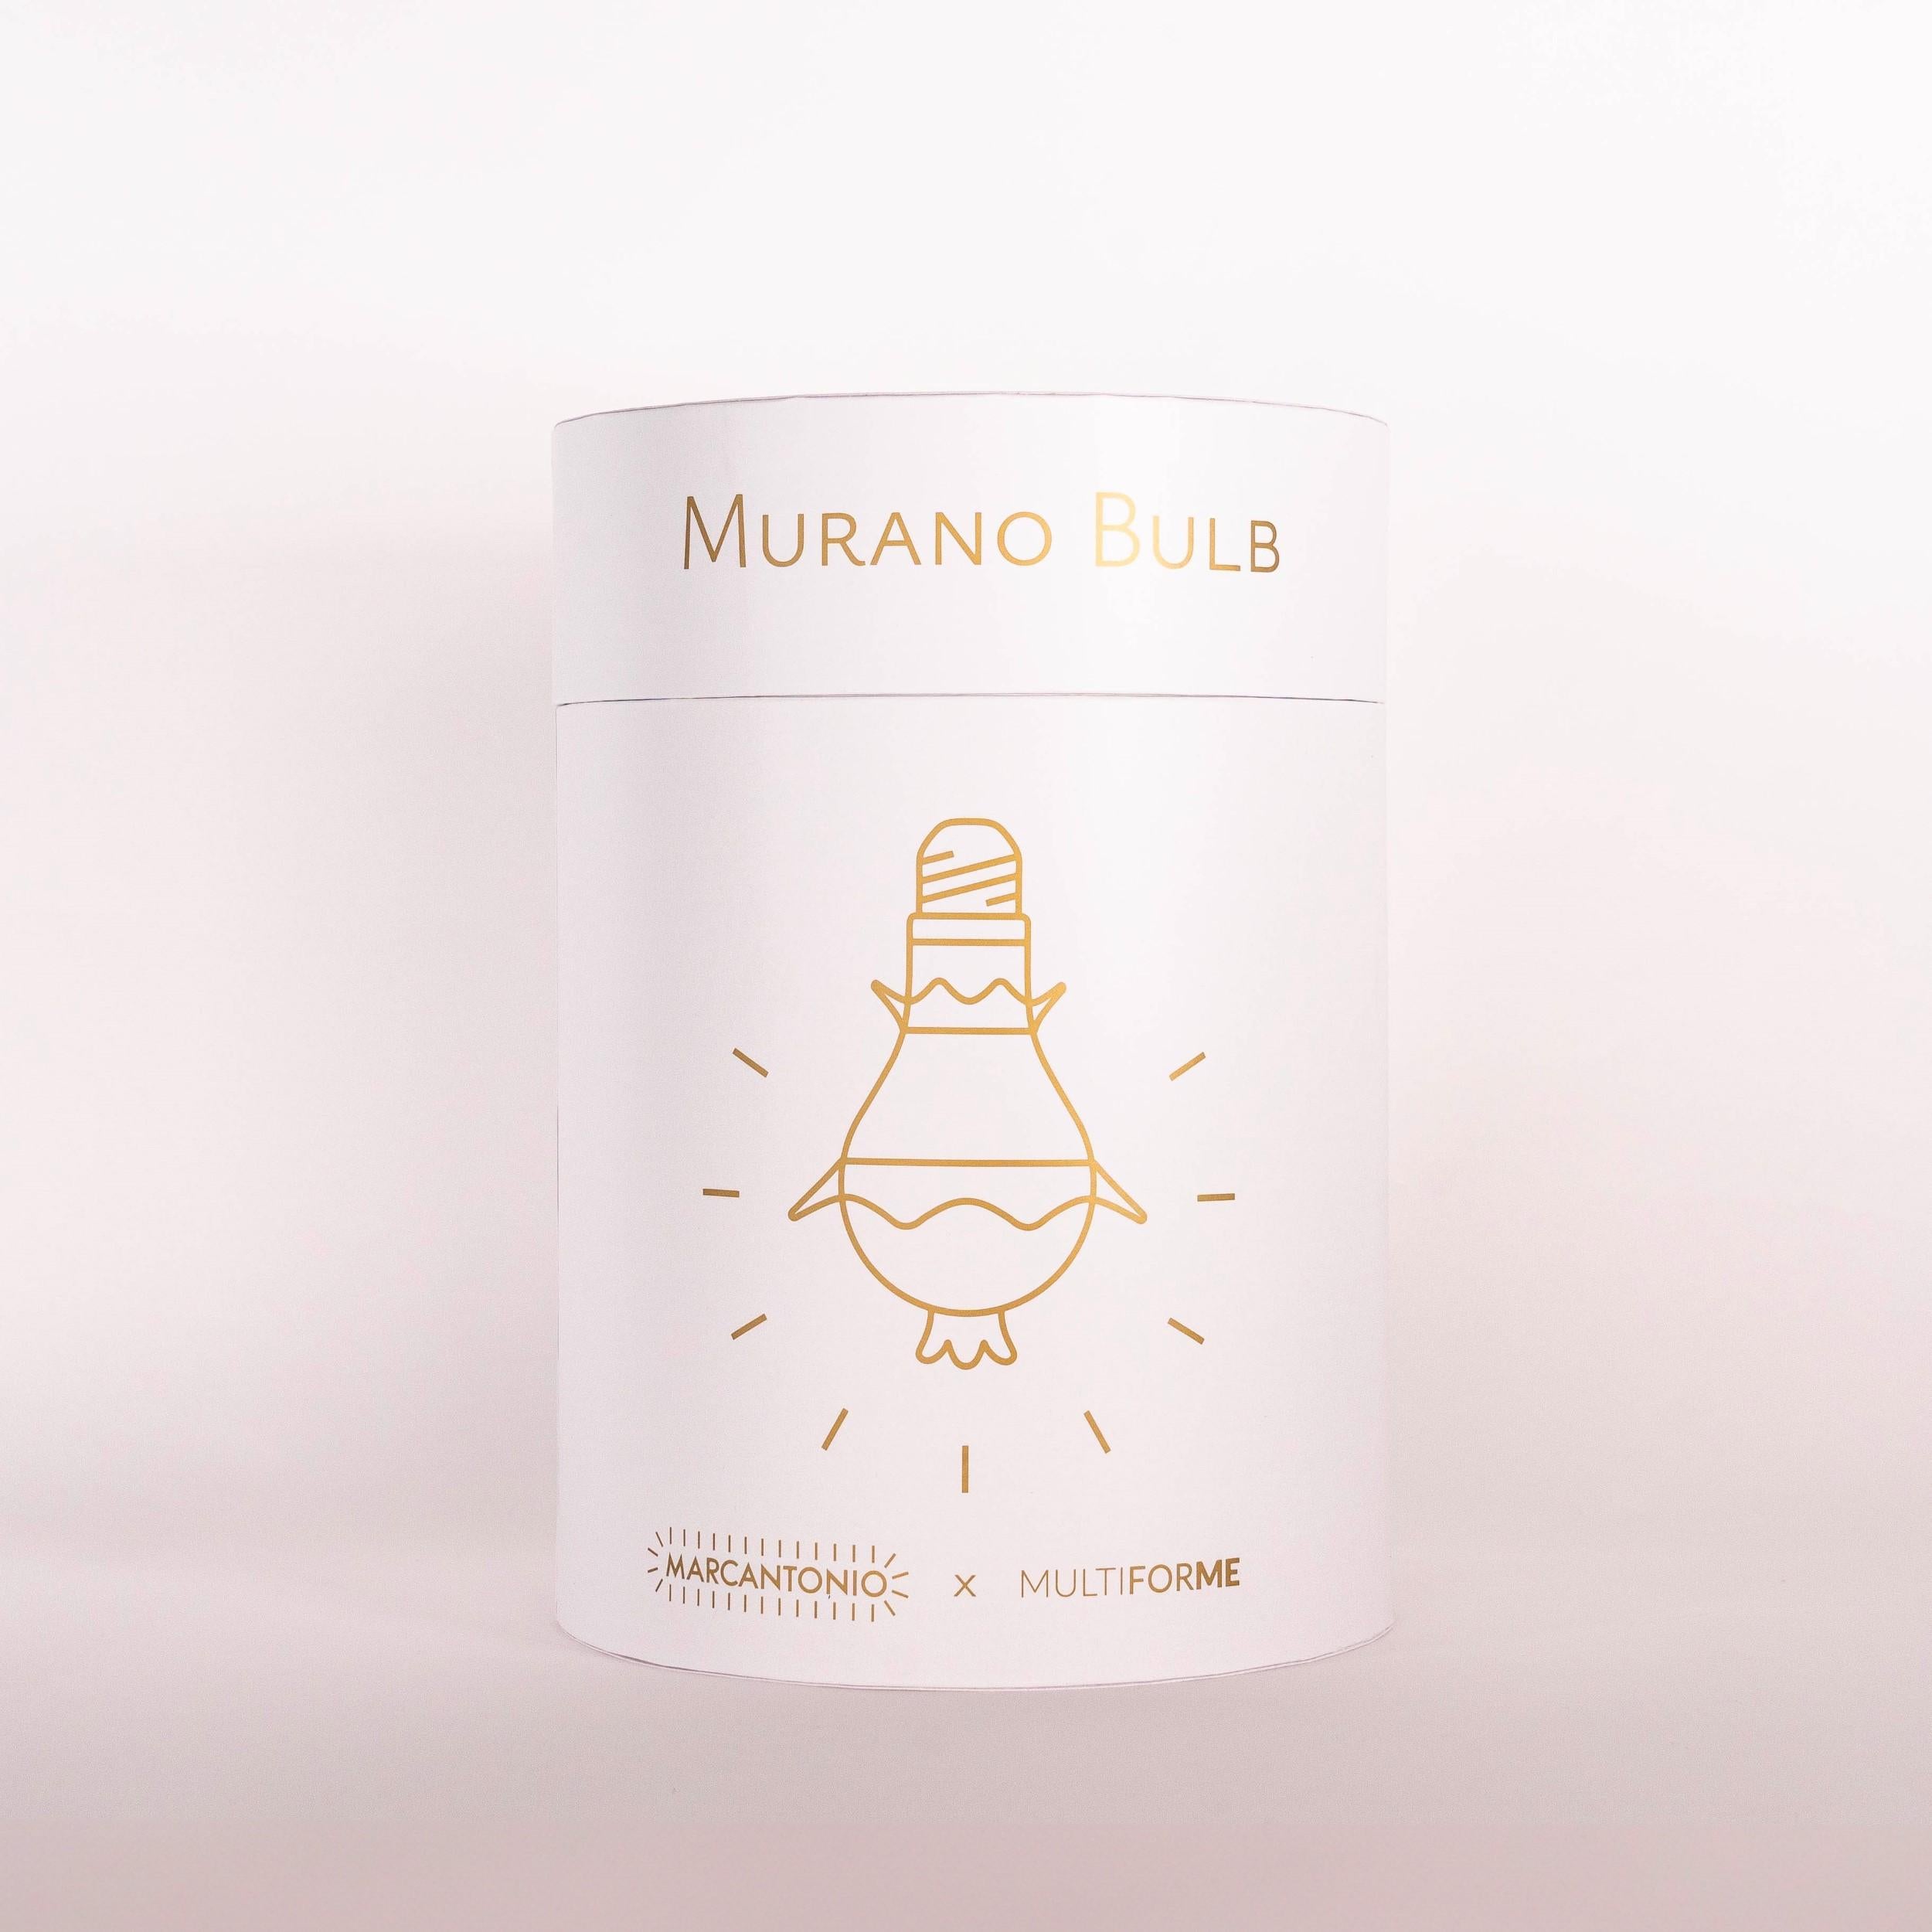 Artistic glass lightbulb chandelier Murano Bulb Marcantonio X Multiforme #04 For Sale 3